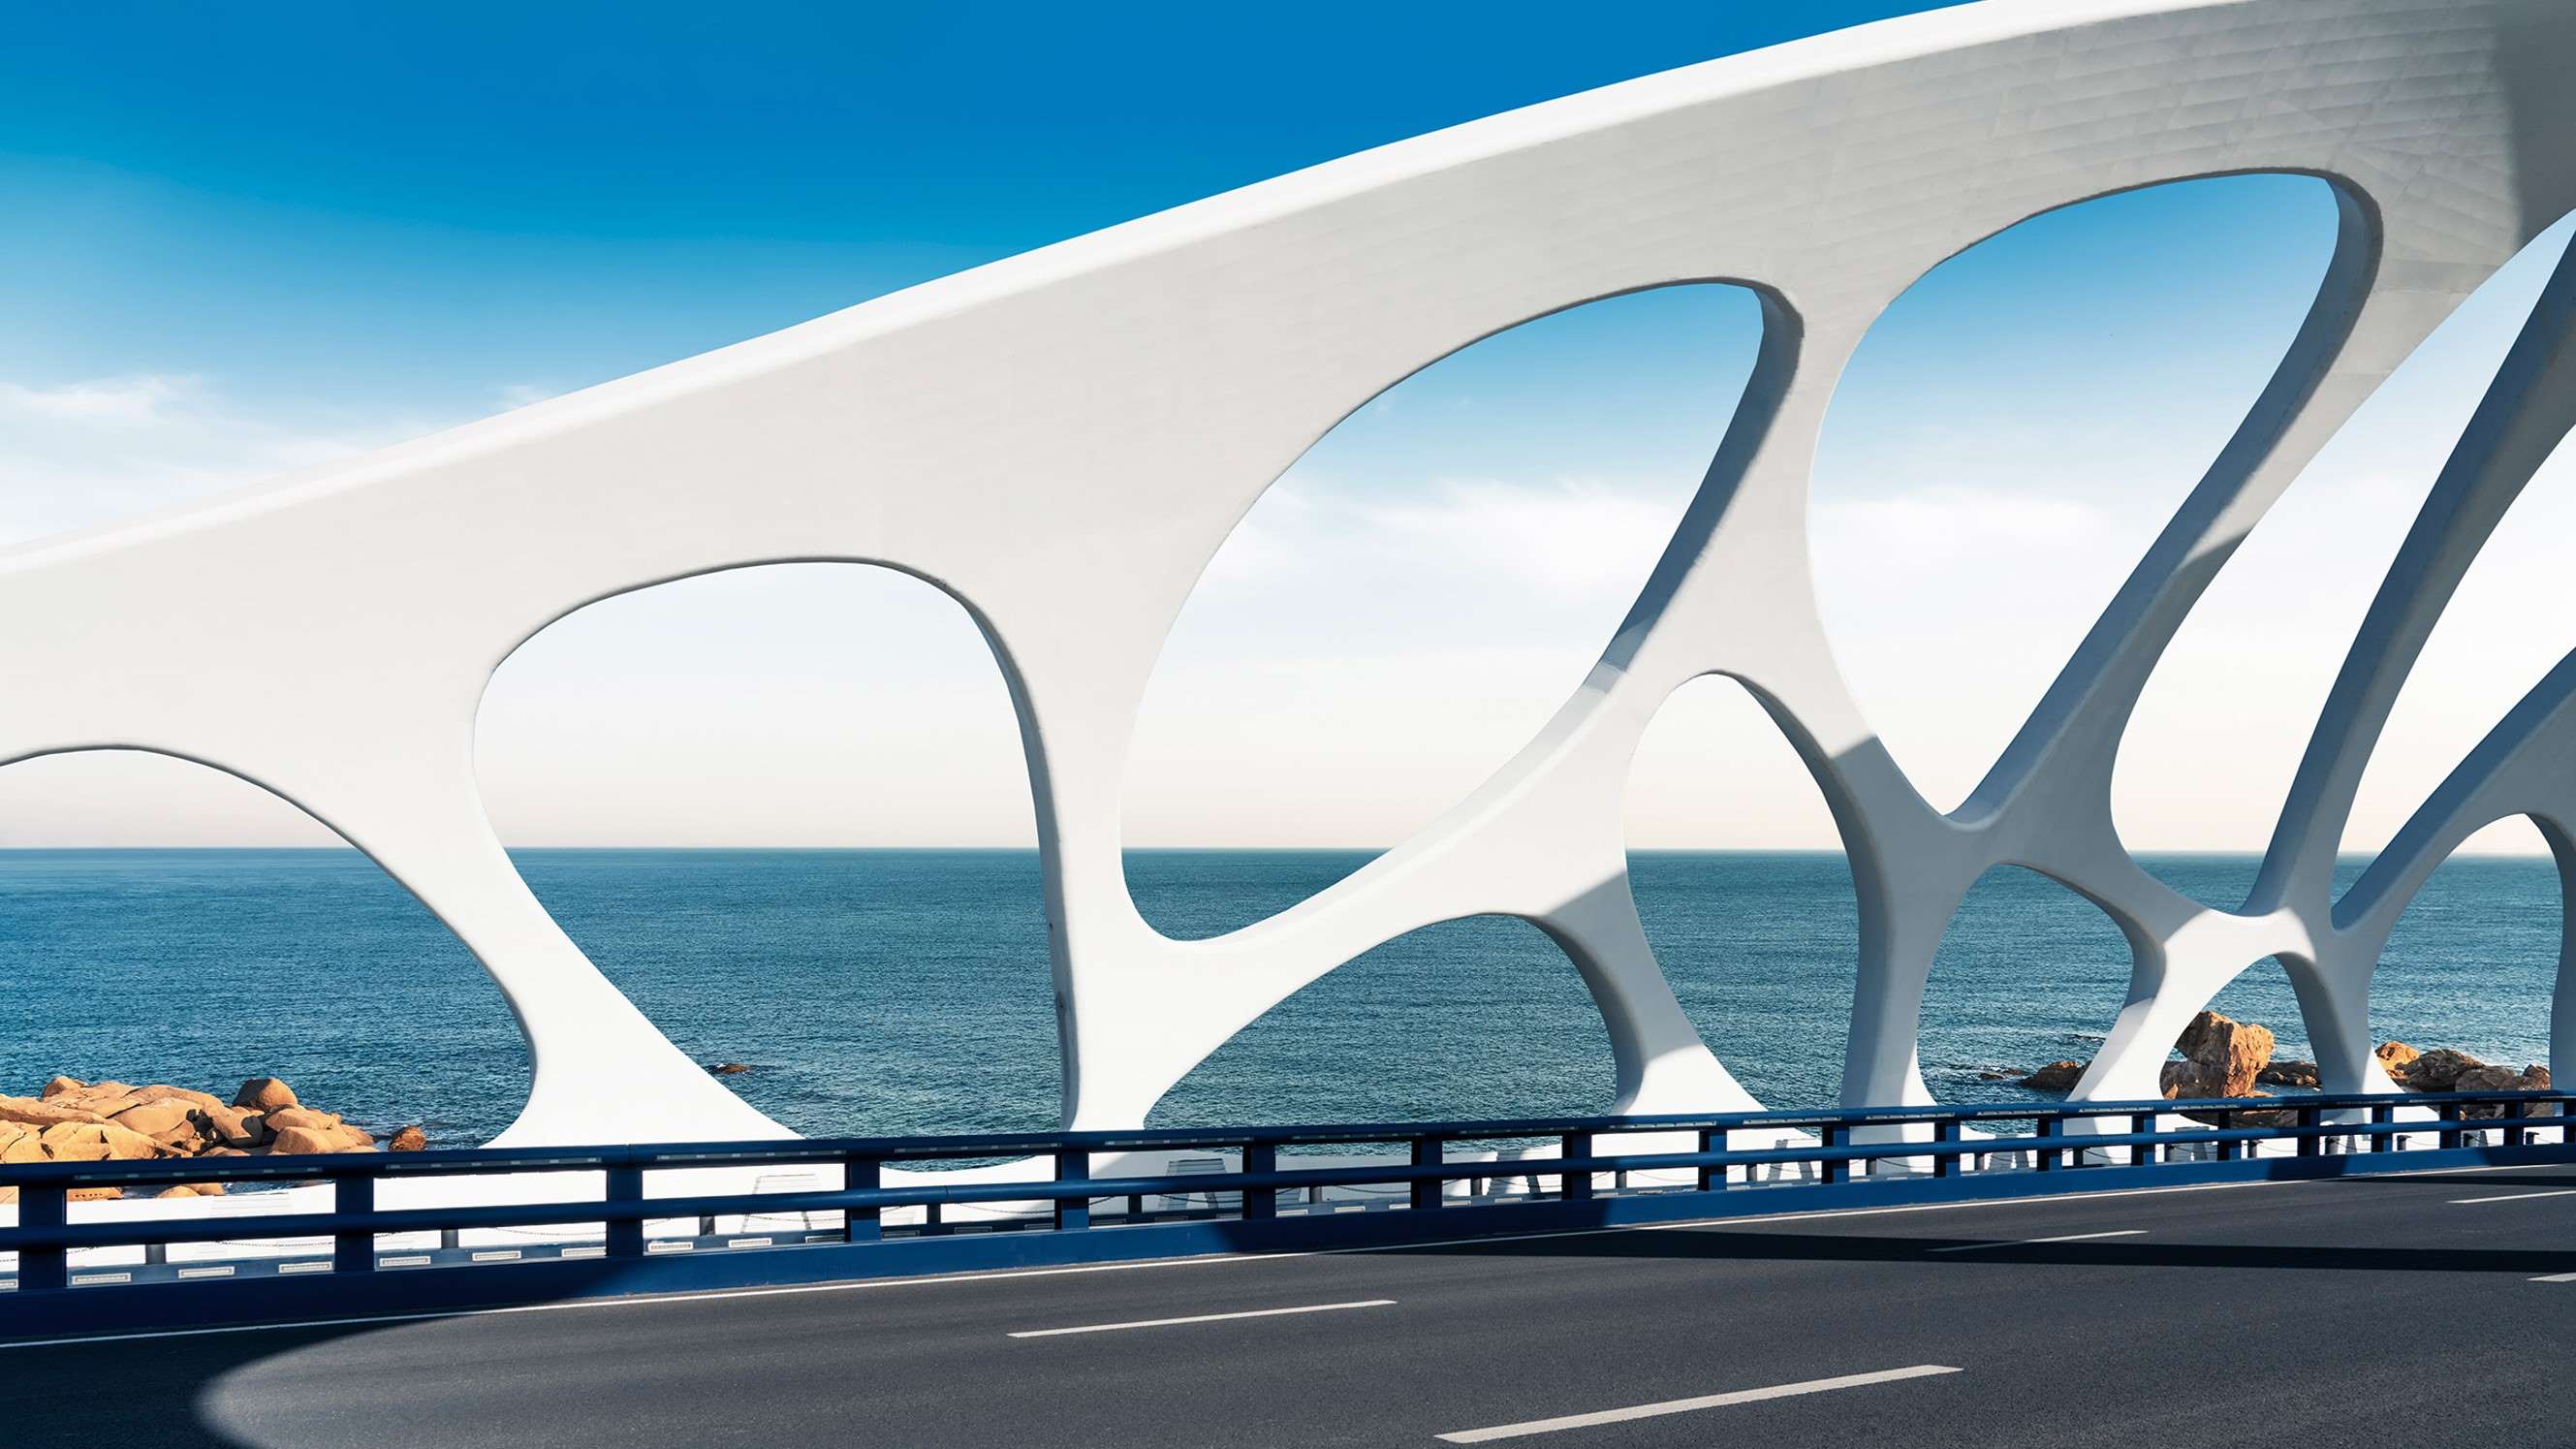 Modern bridge with white arches over the sea